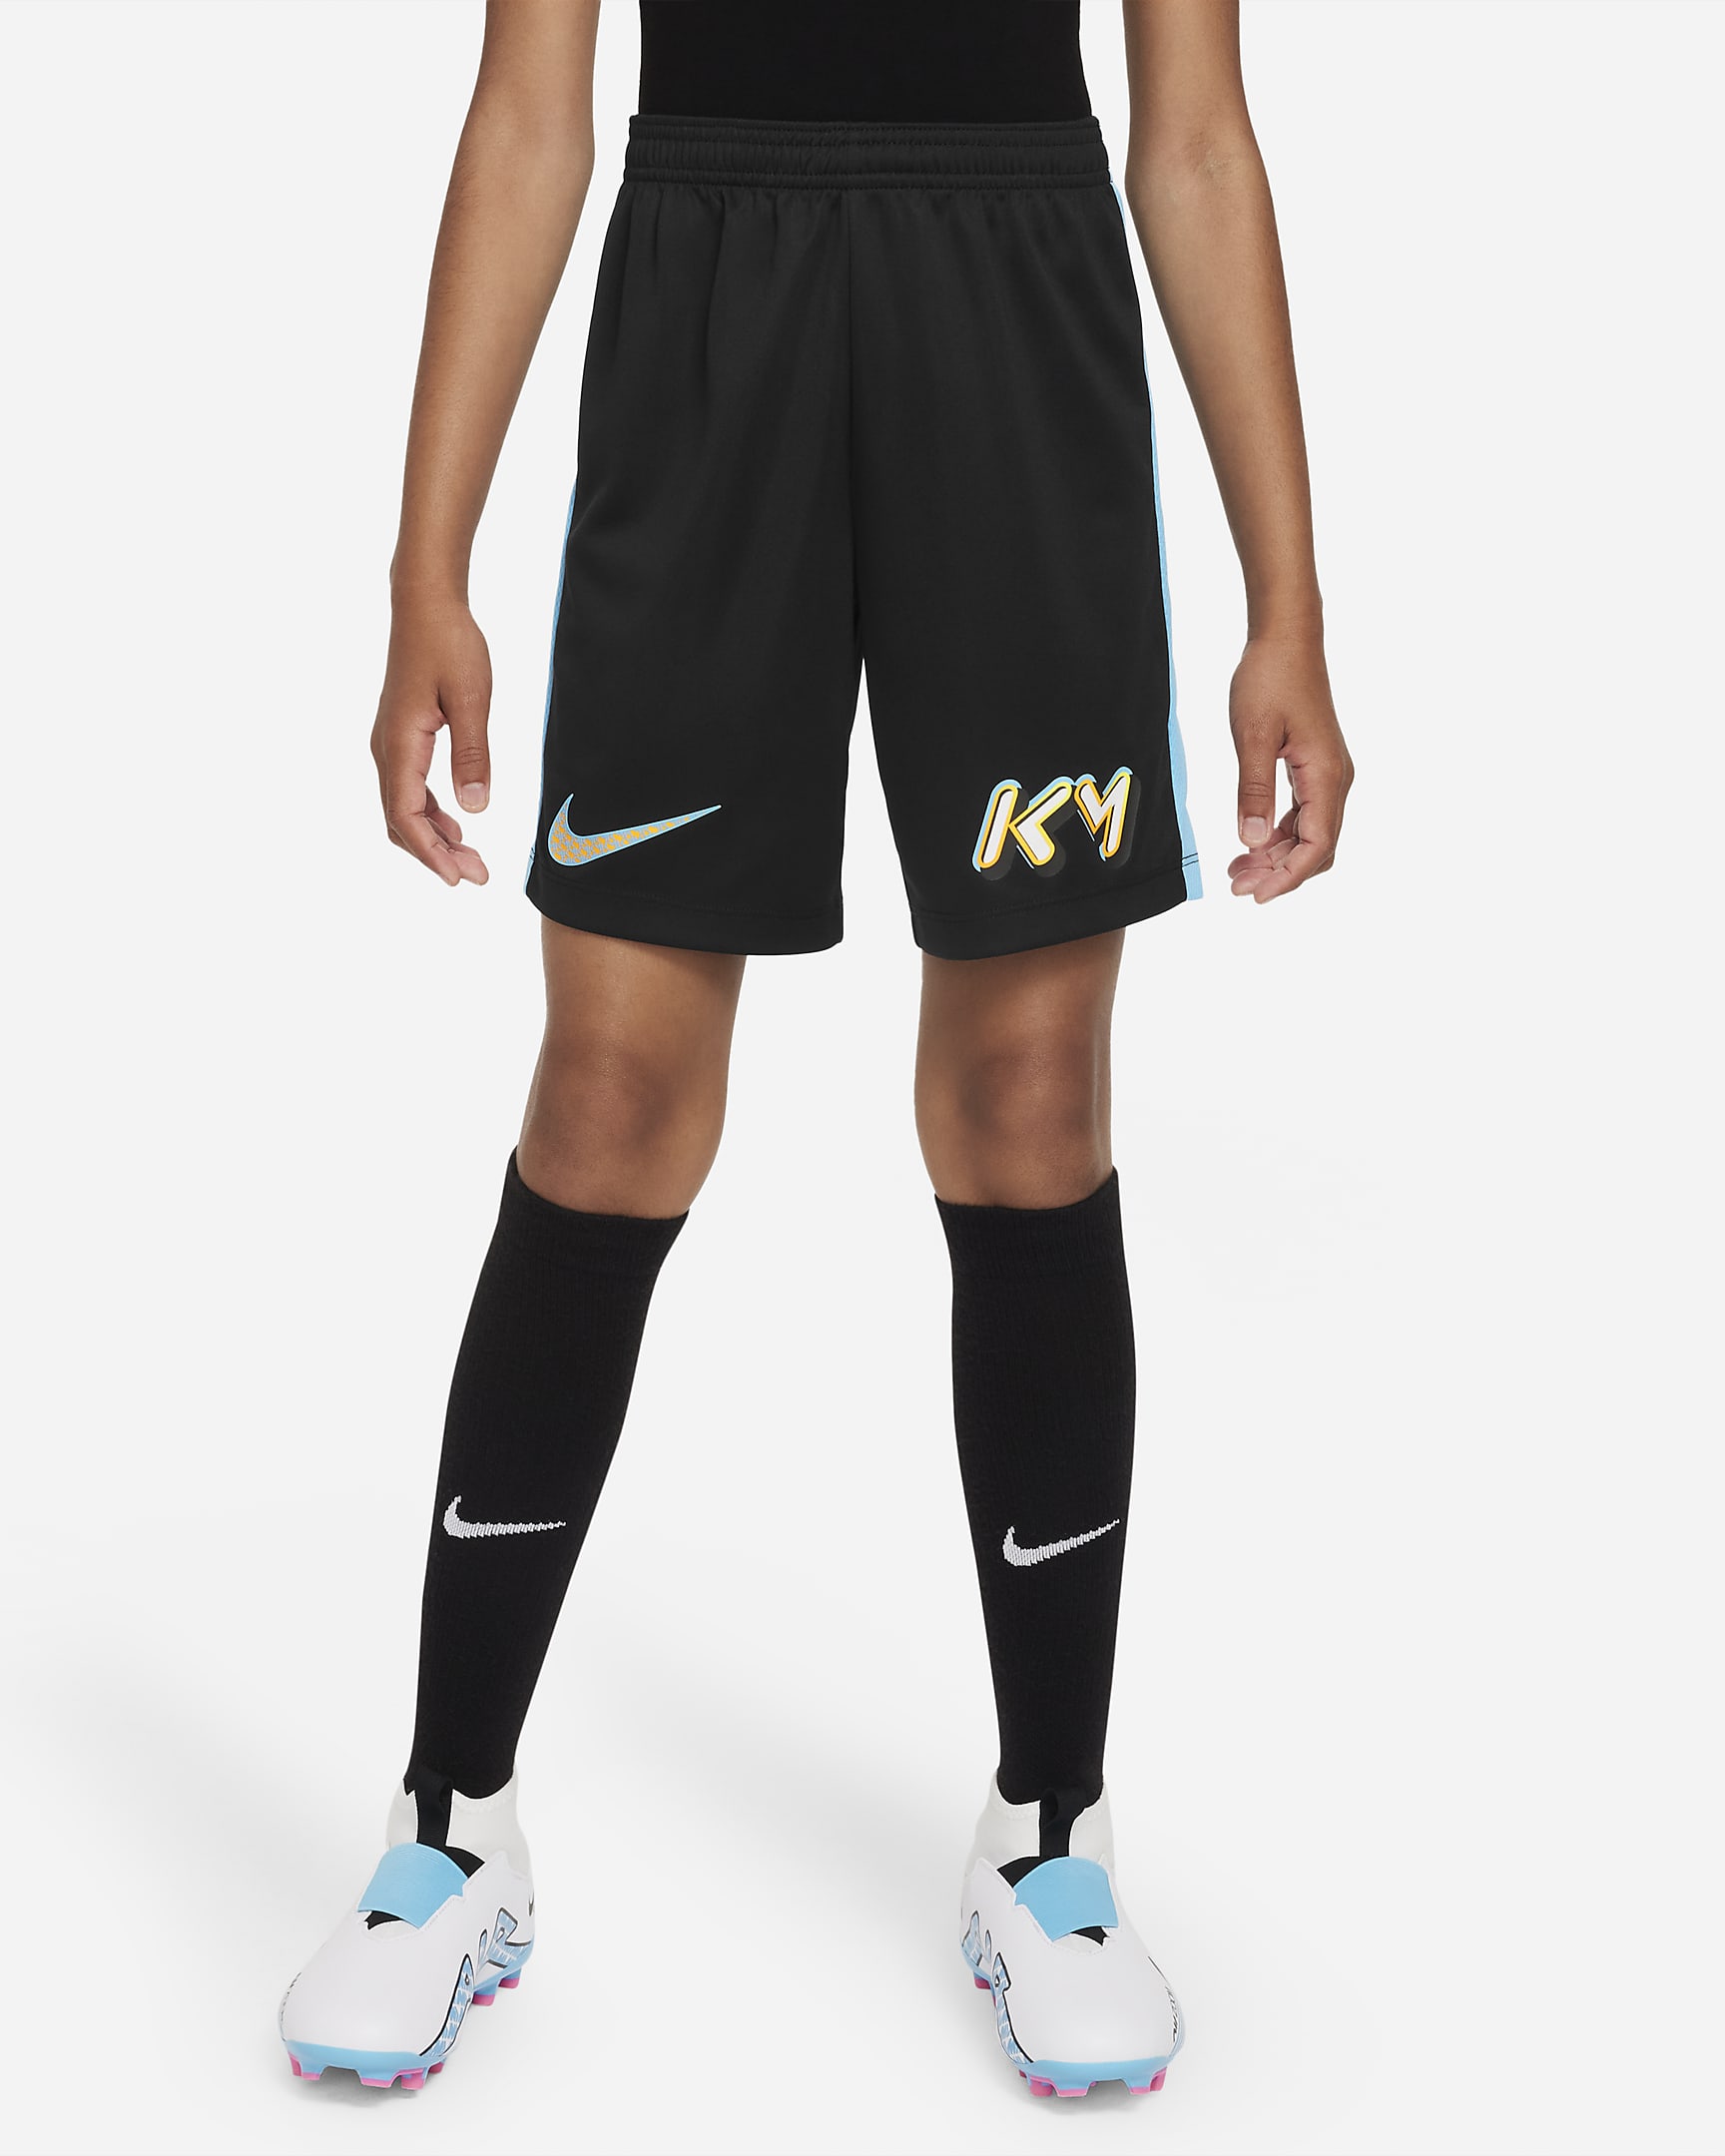 KM Nike Dri-FIT Older Kids' Football Shorts. Nike SG